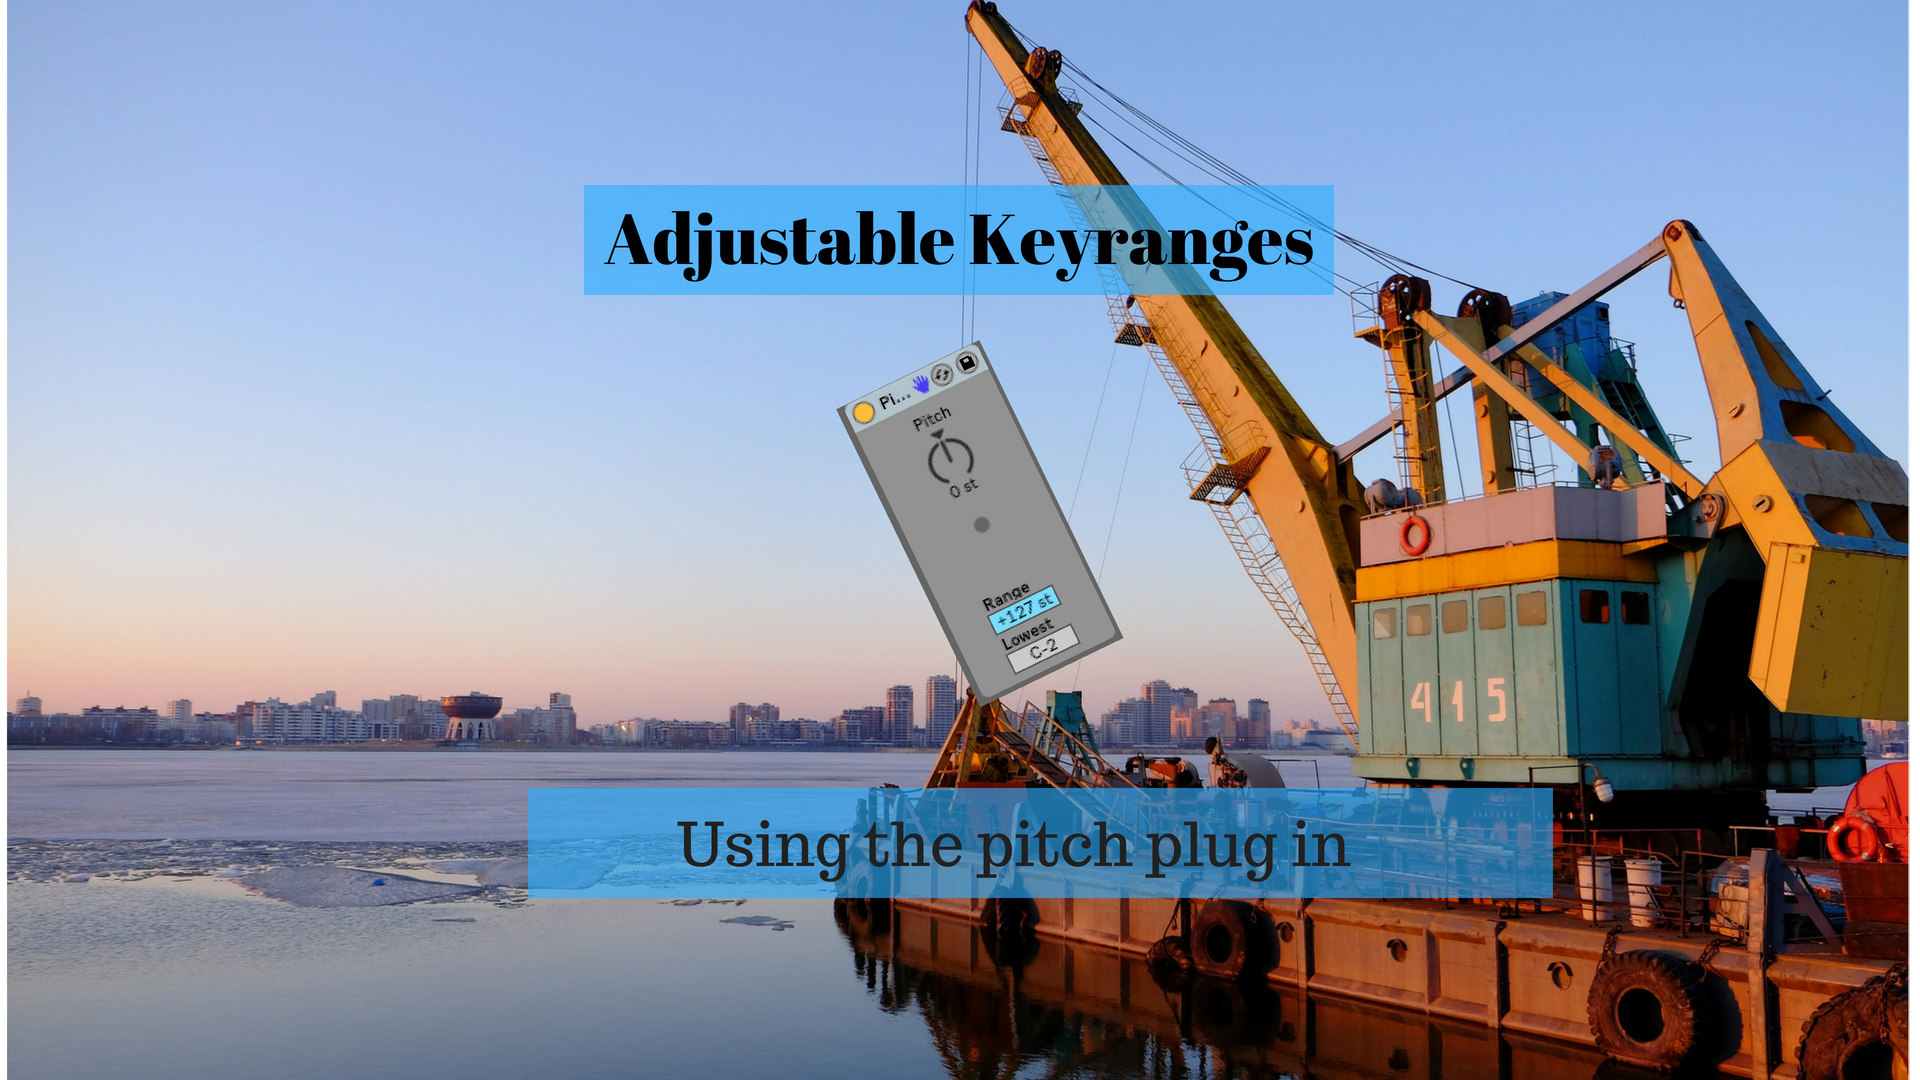 Adjustable Key Range: Without Suite